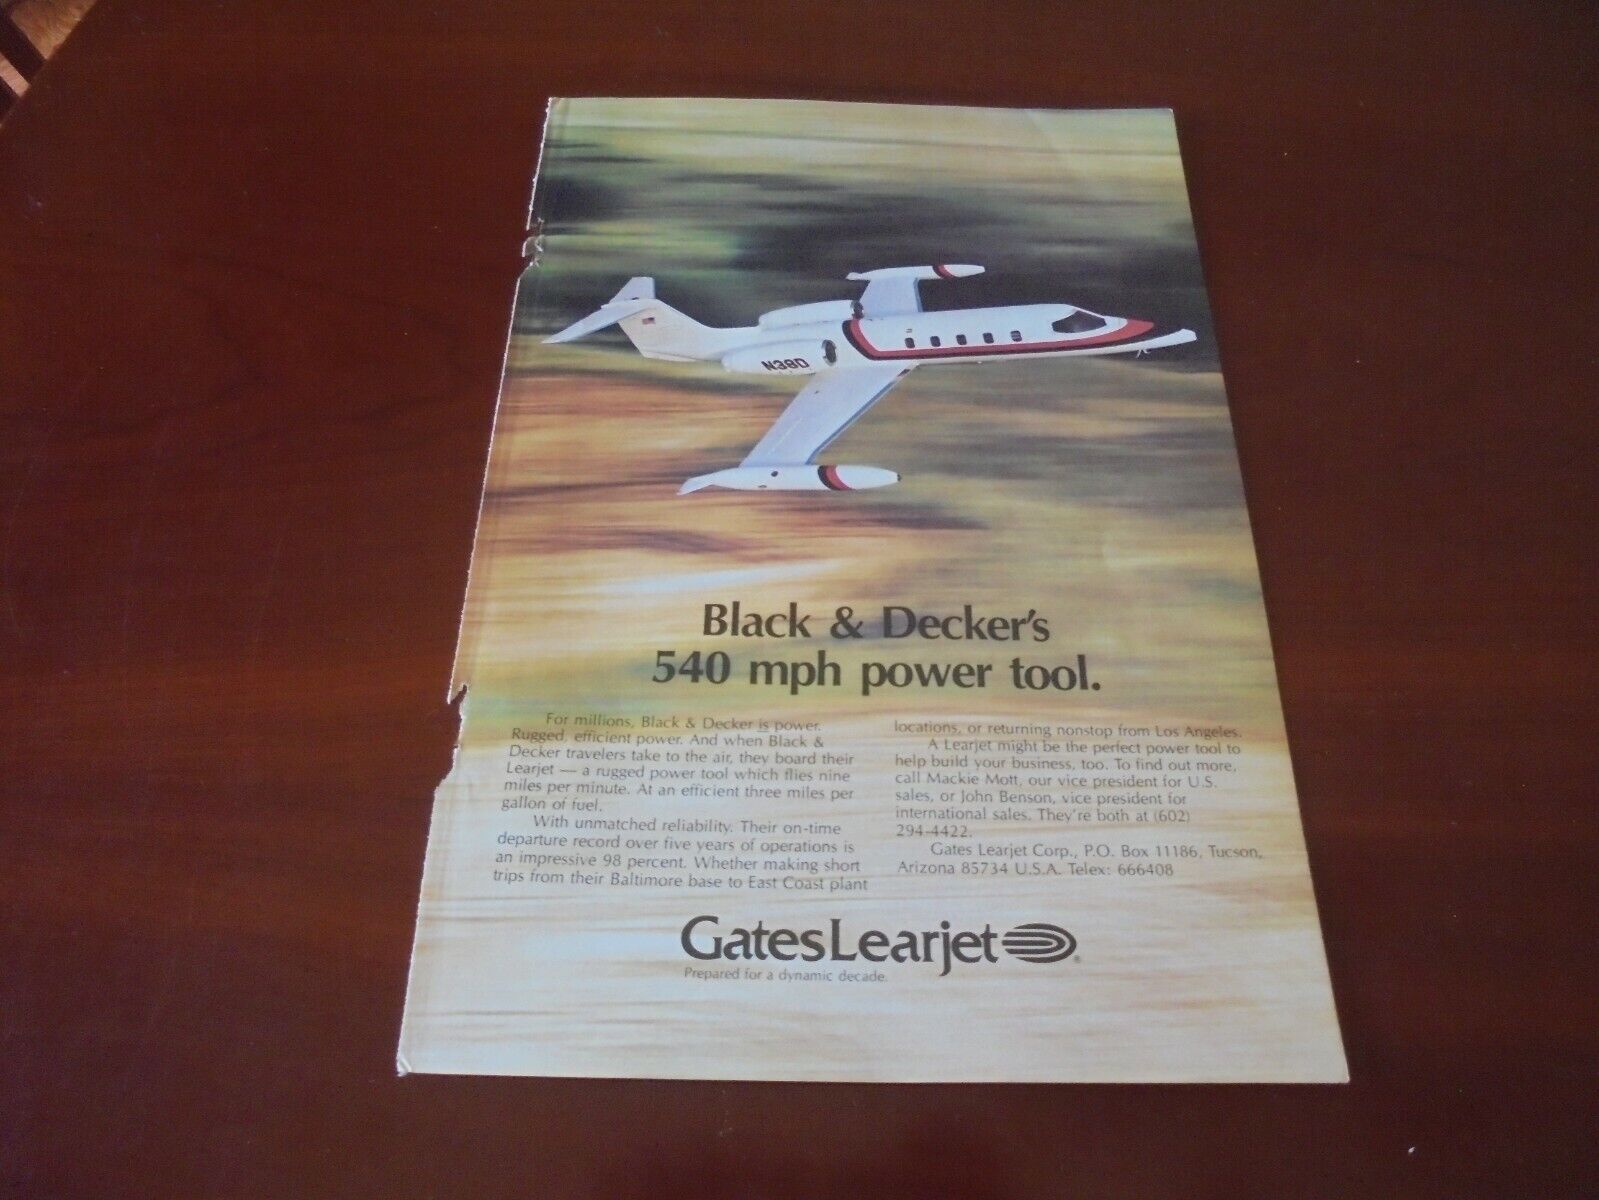 1982 Black & Decker\'s aircraft of Gates Learjet Corporation Print Ad 